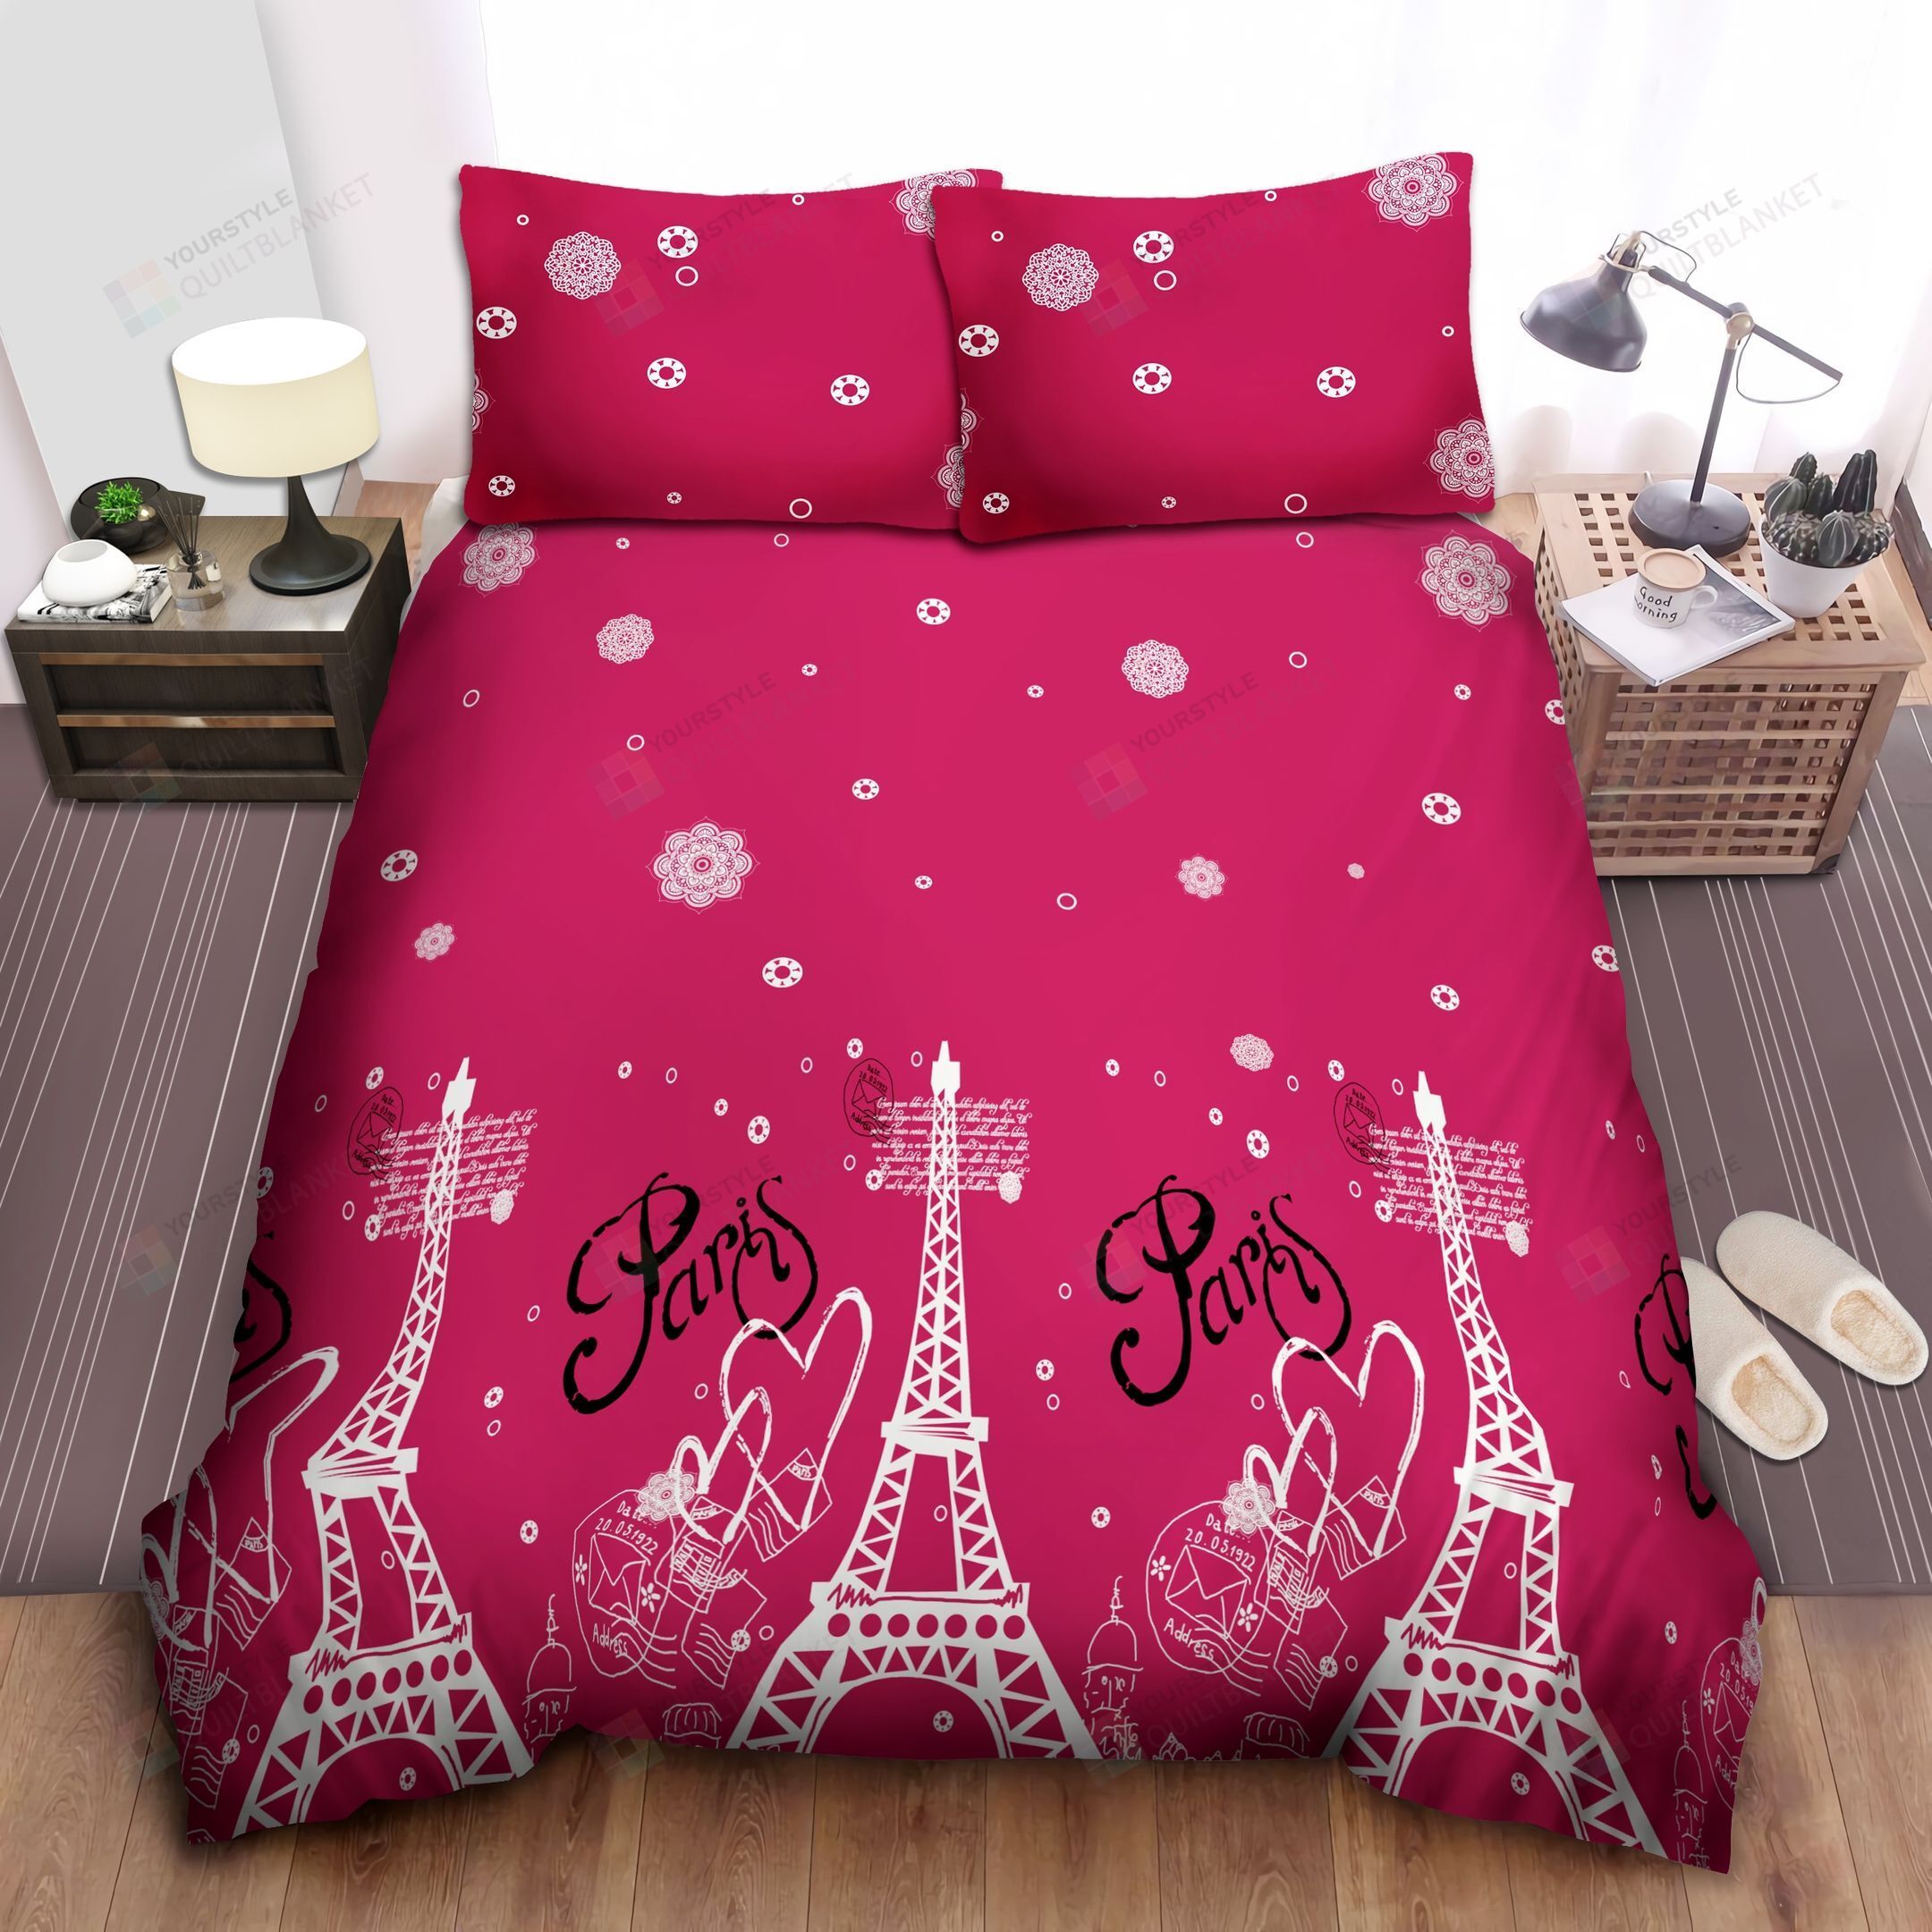 Paris Cotton Bed Sheets Spread Comforter Duvet Cover Bedding Sets